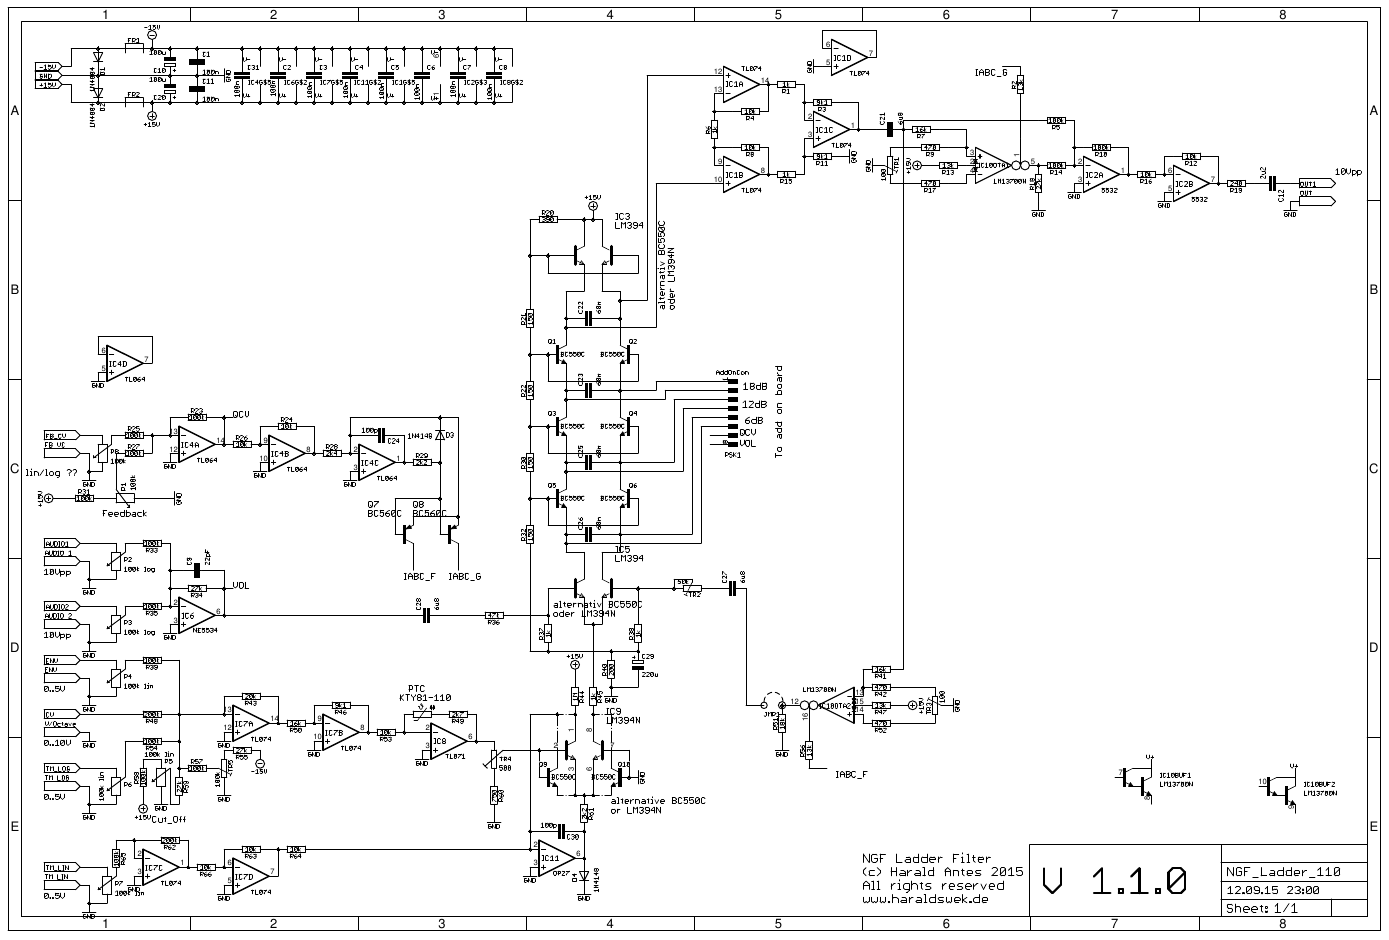 Next generation formant Moog Ladder filter schematic